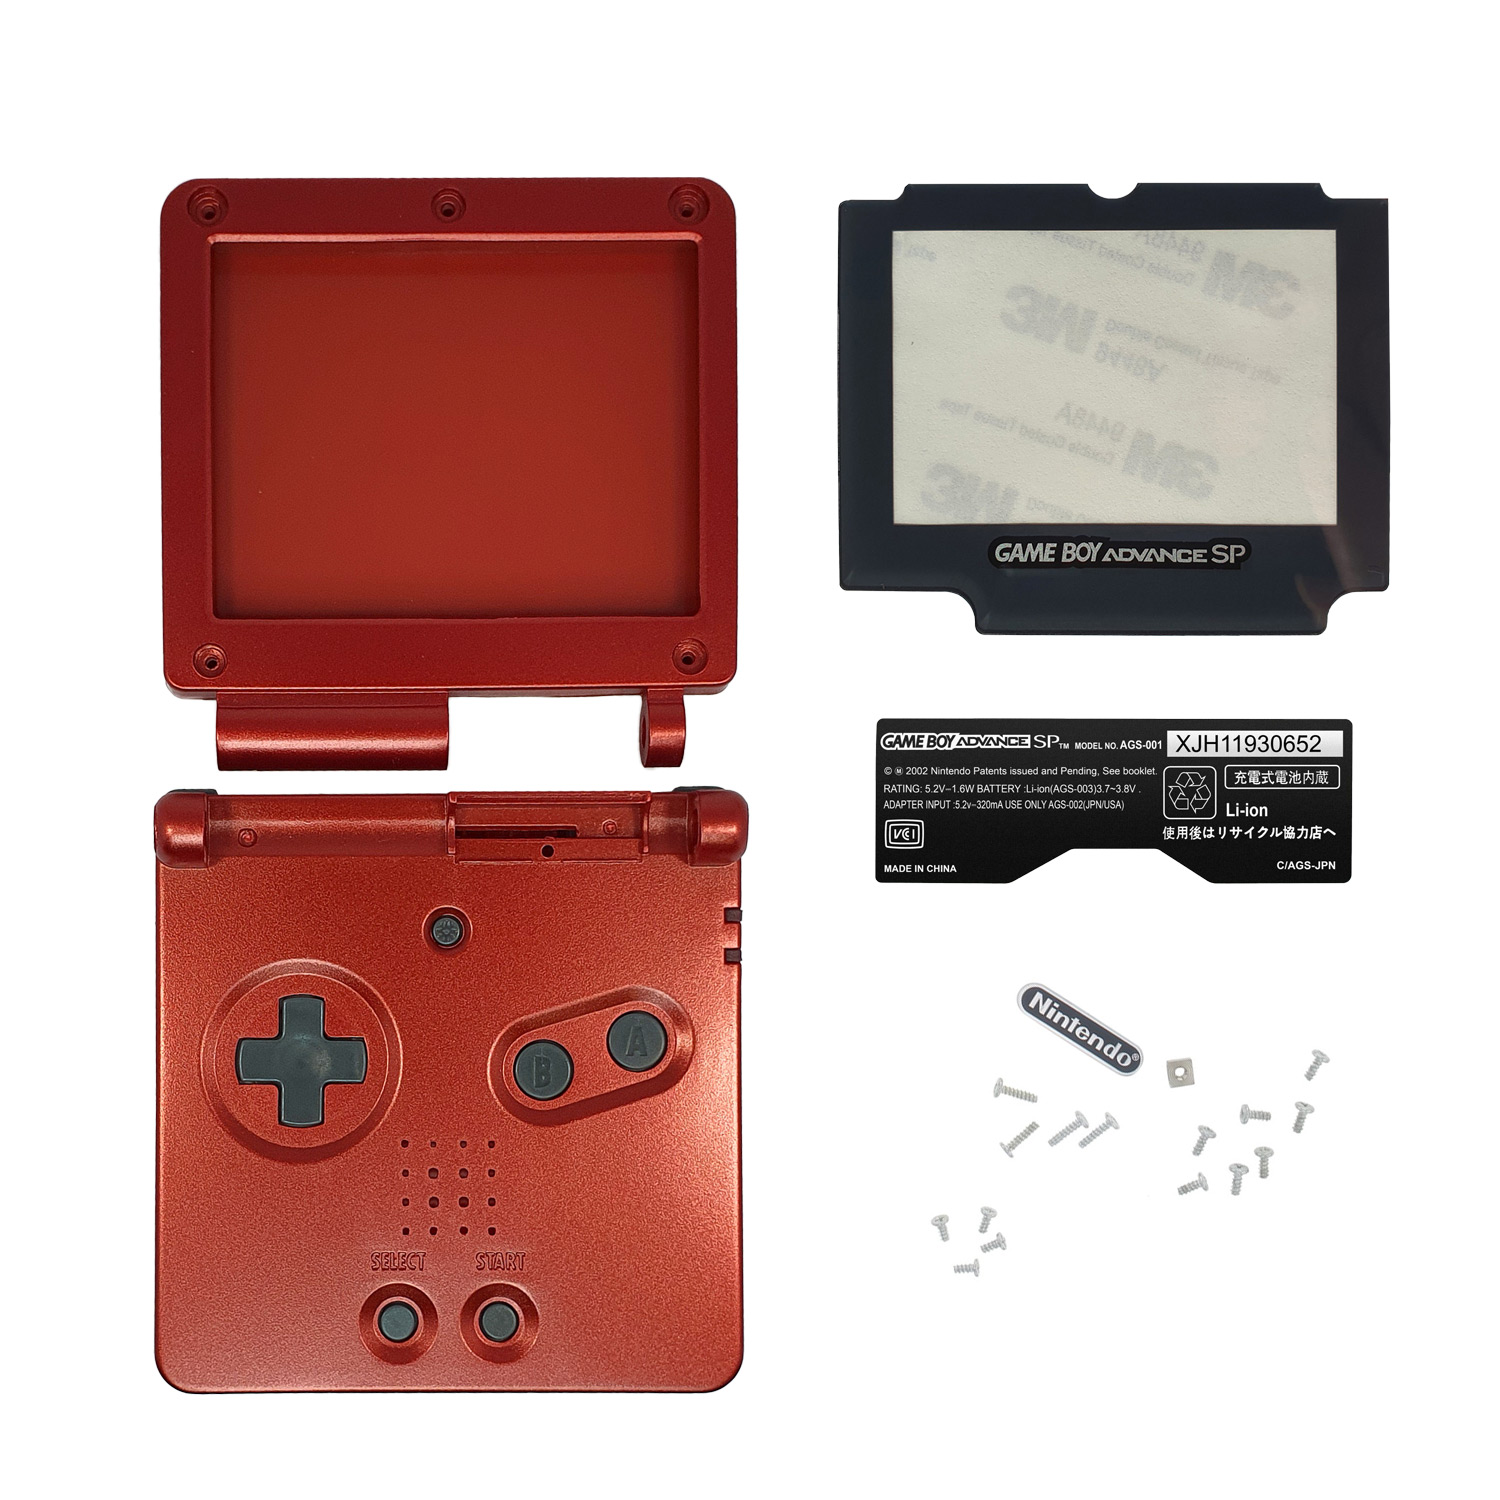 Etui (rood) voor Game Boy Advance SP